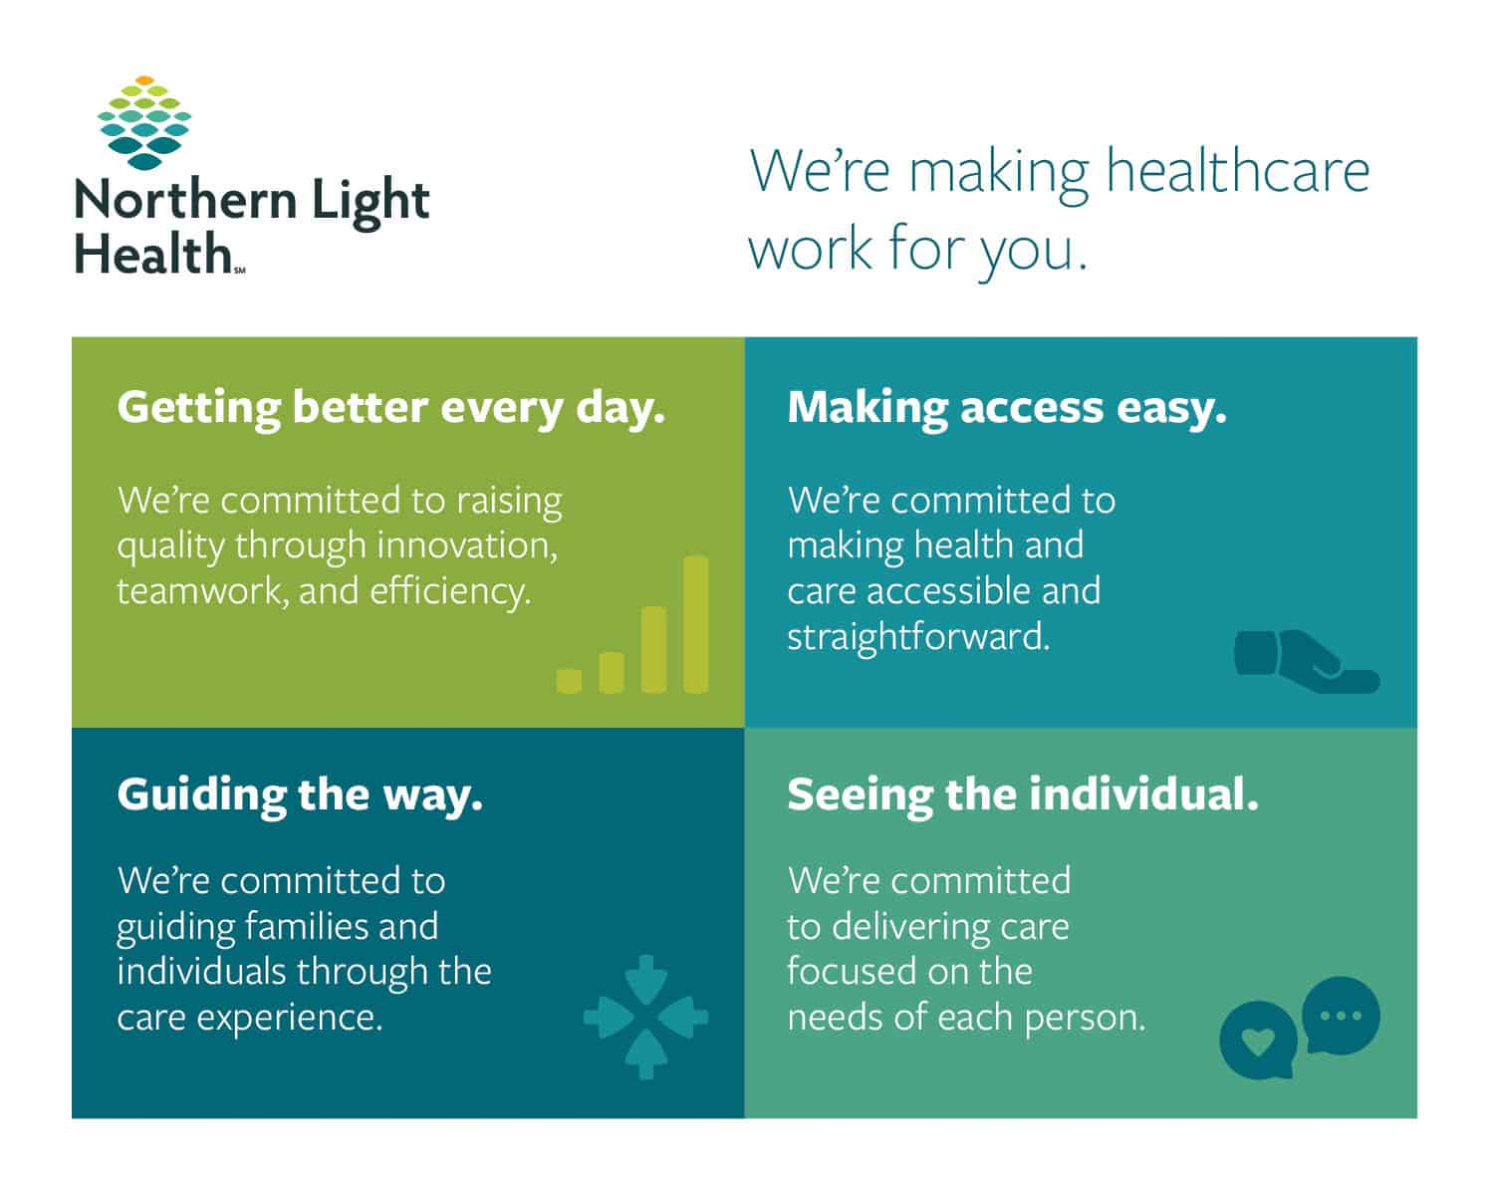 Northern Light Health - Brand promise